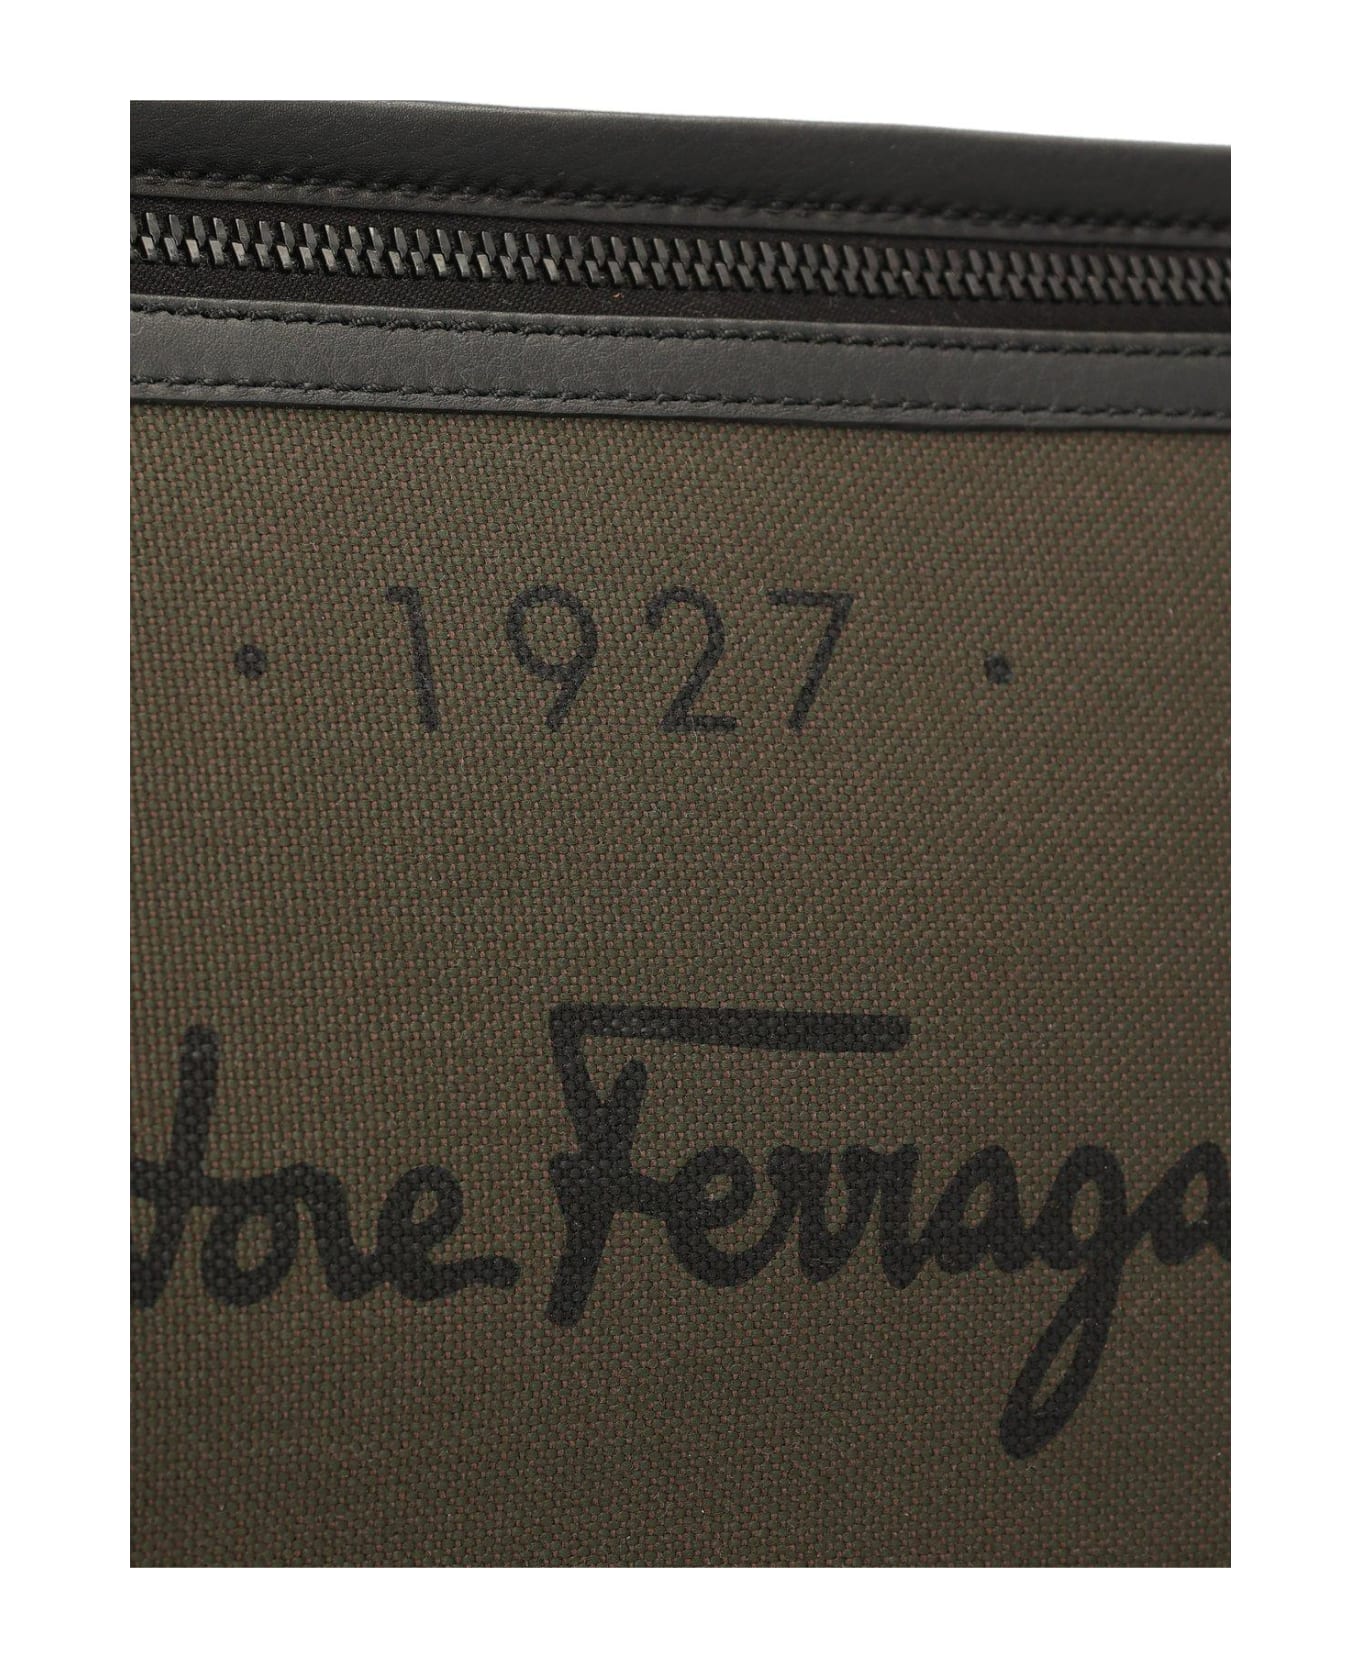 Ferragamo 1927 Logo Printed Toiletry Bag - Brown